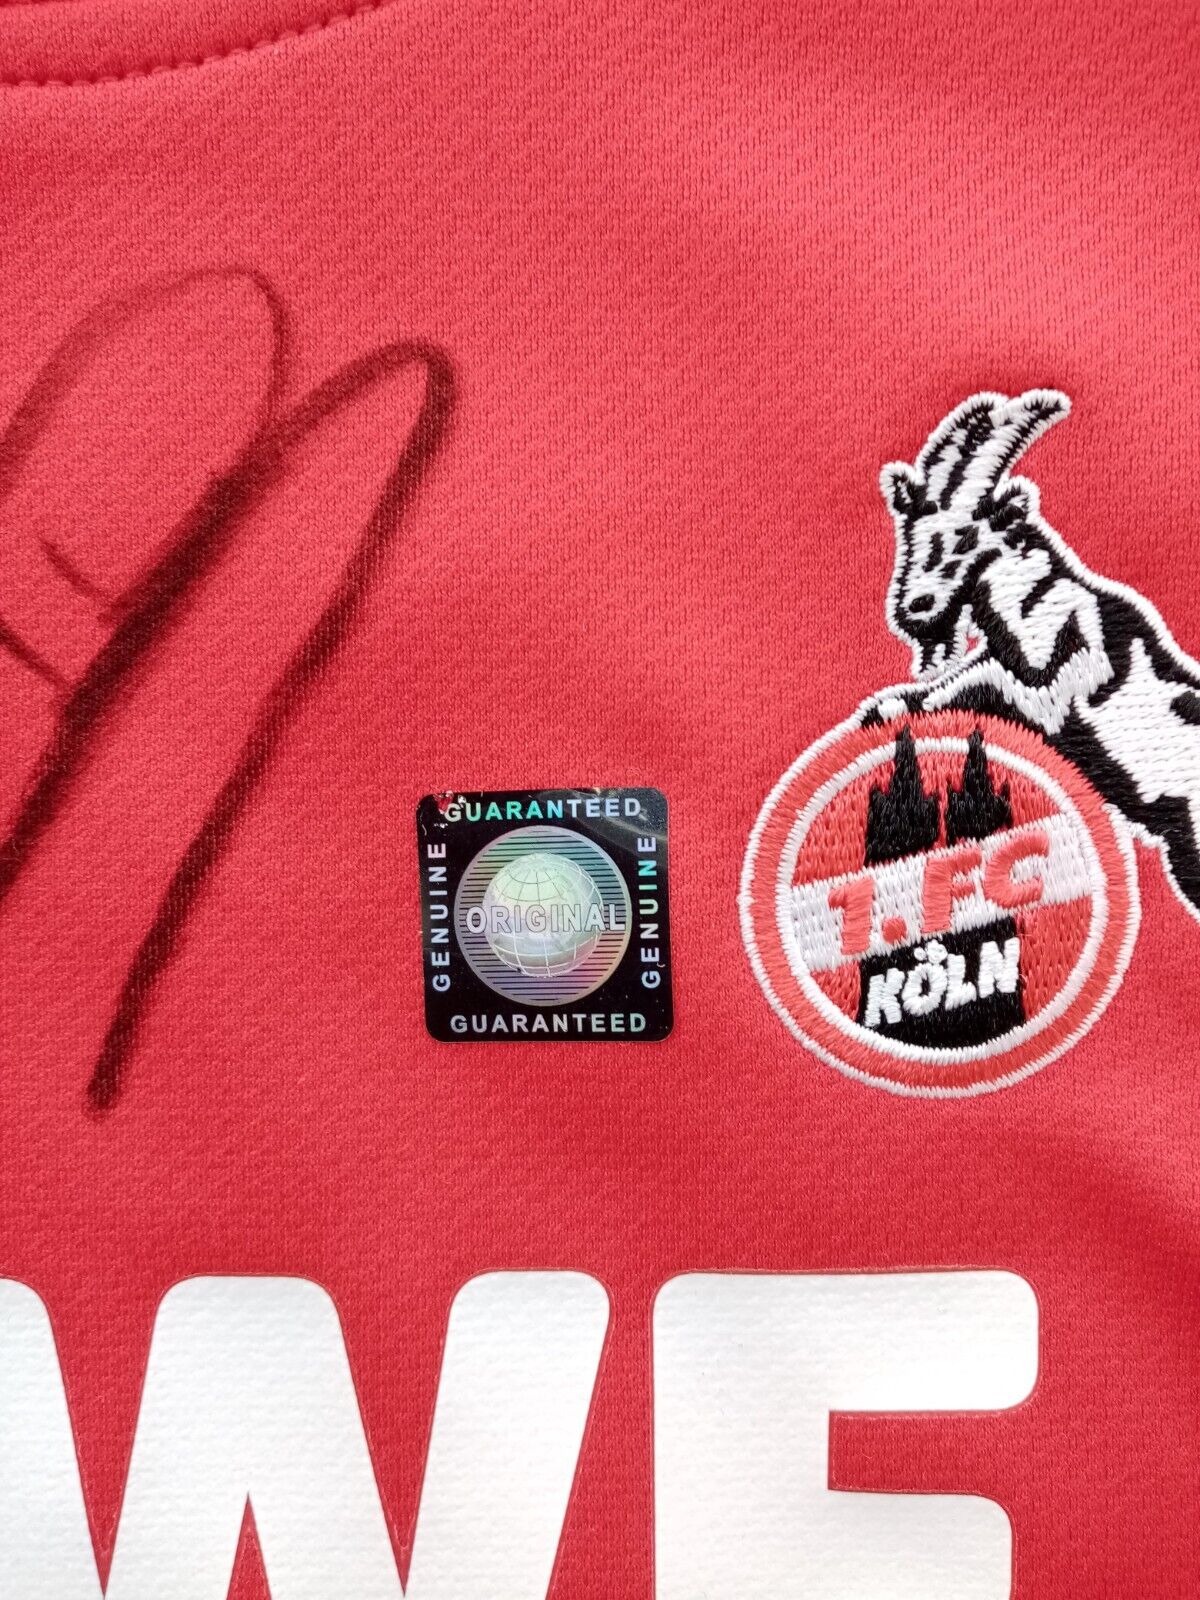 1. FC Köln Trikot Rensing signiert Autogramm Bundesliga Fußball Neu Reebok 86